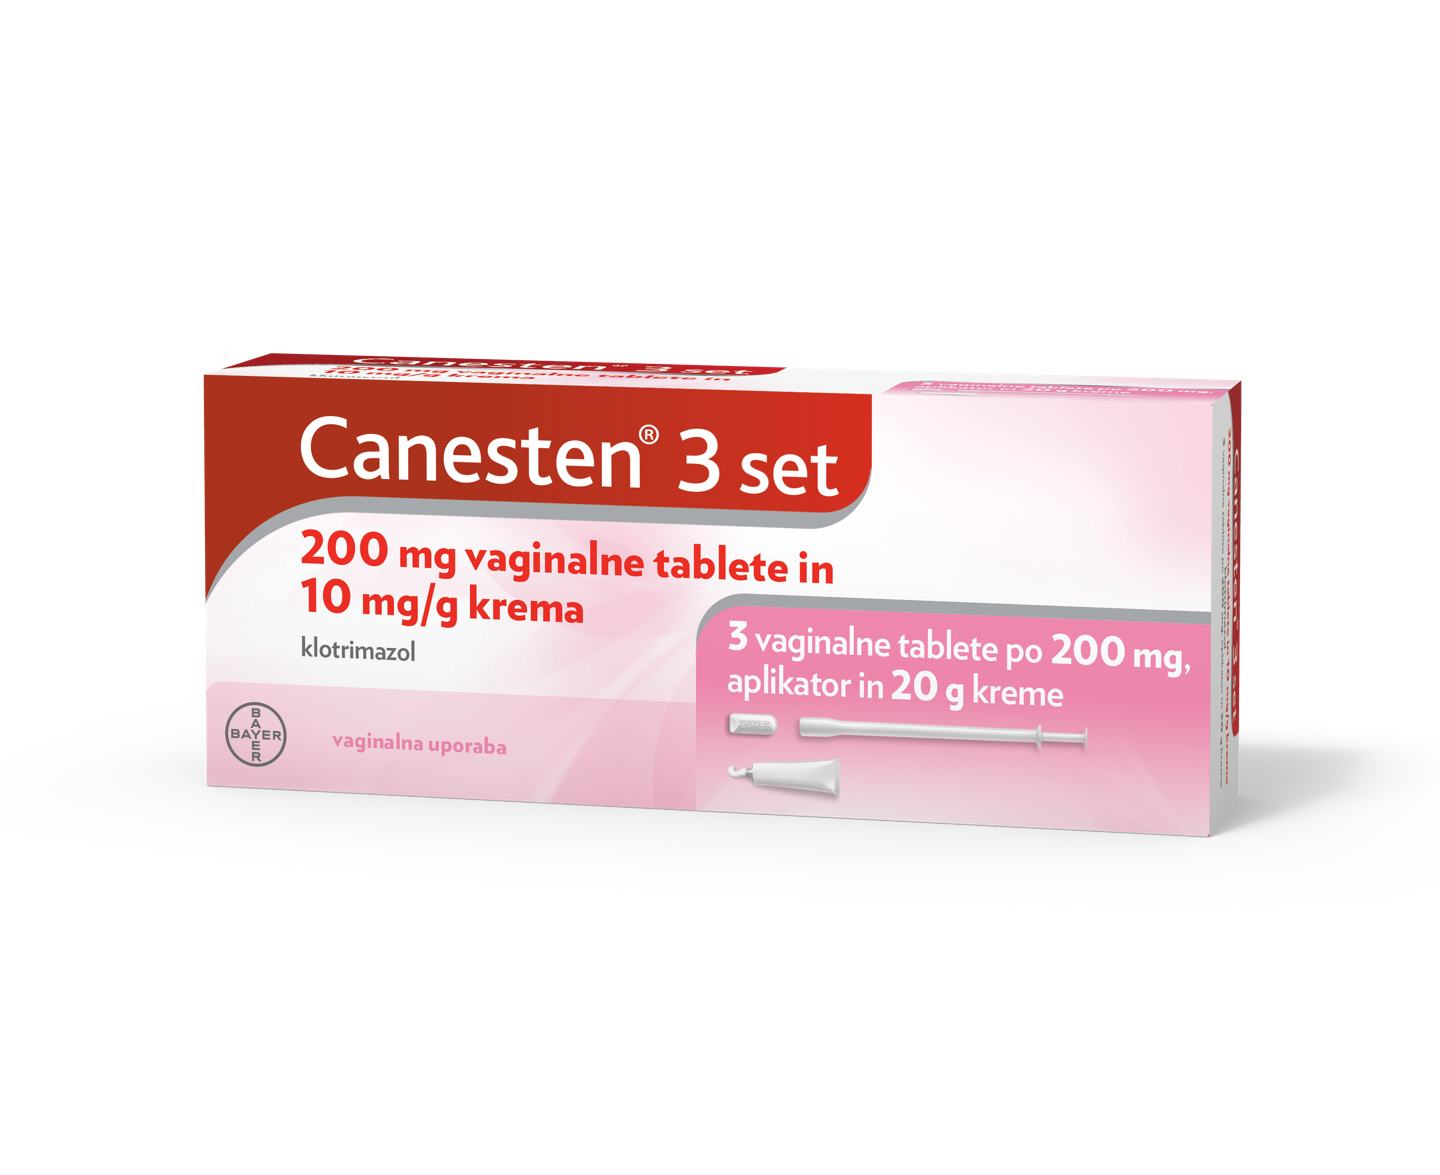 Canesten® 3 set 200 mg vaginalne tablete in 10 mg/g krema